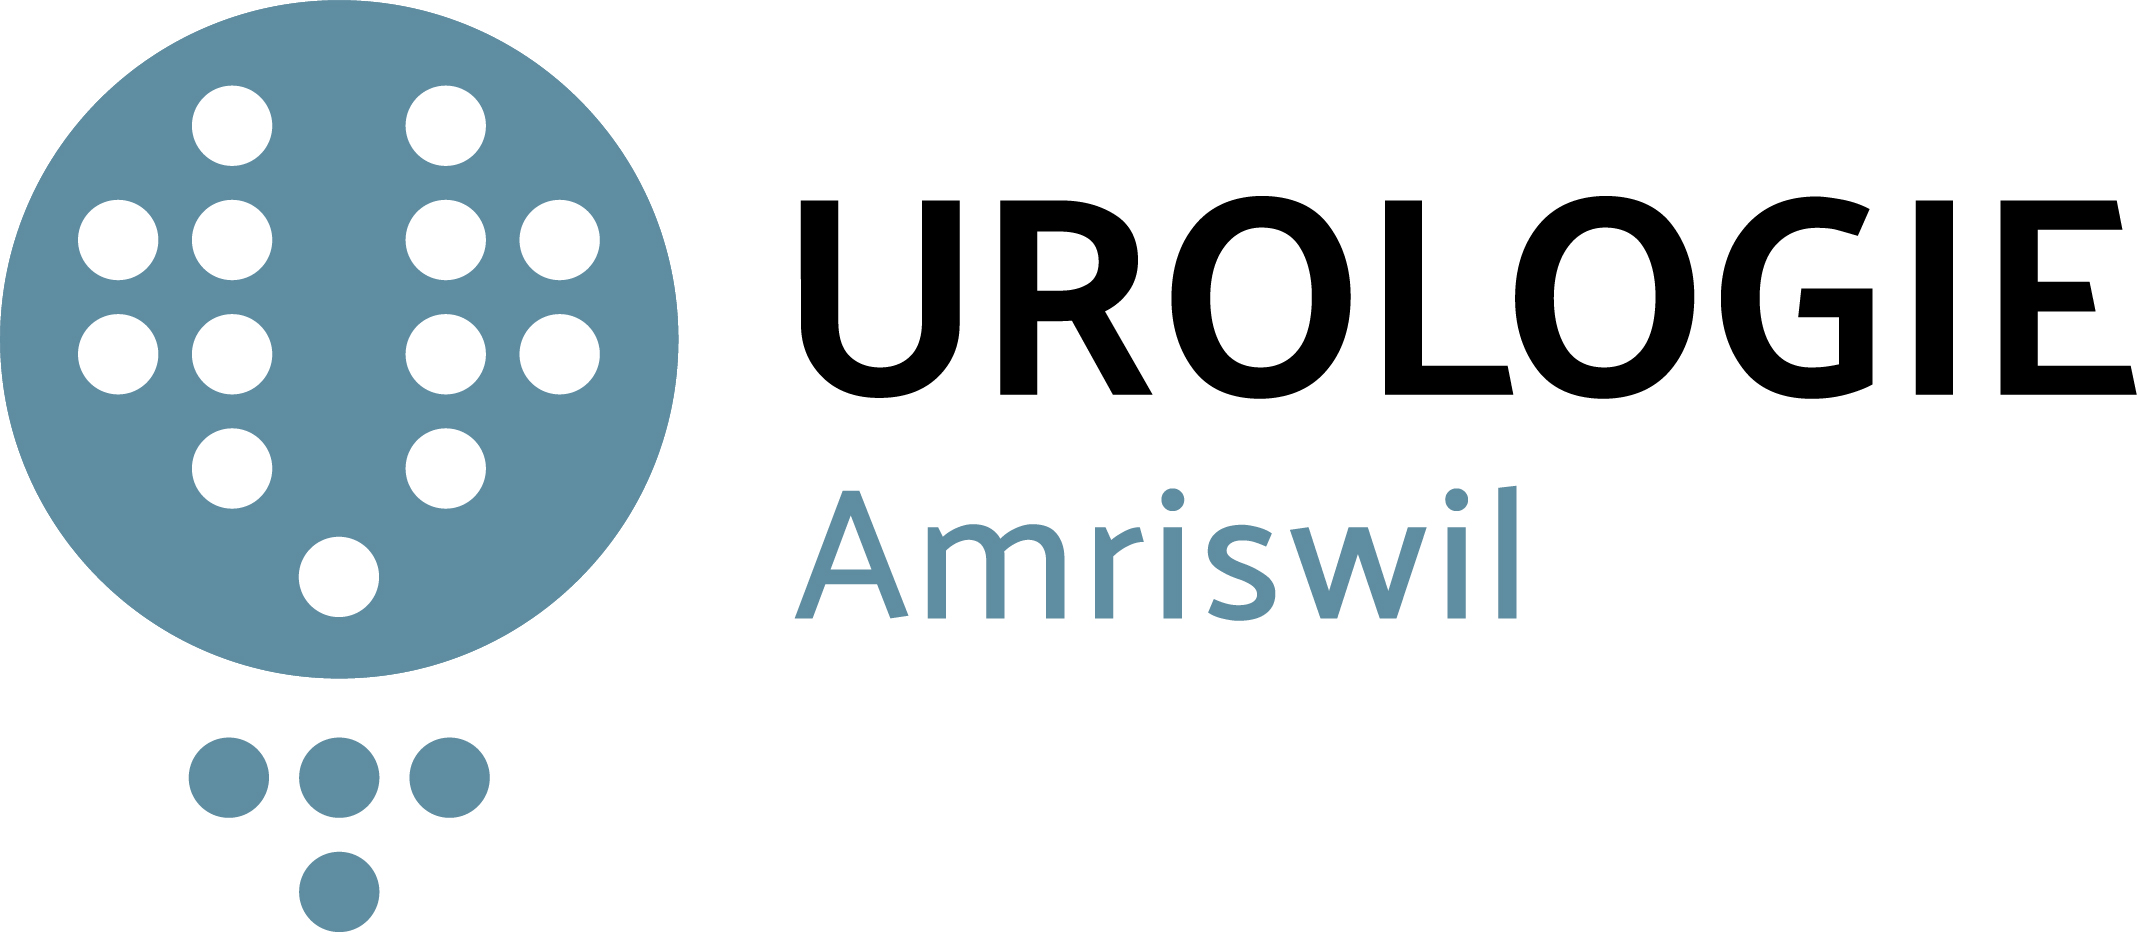 Urologie Amriswil